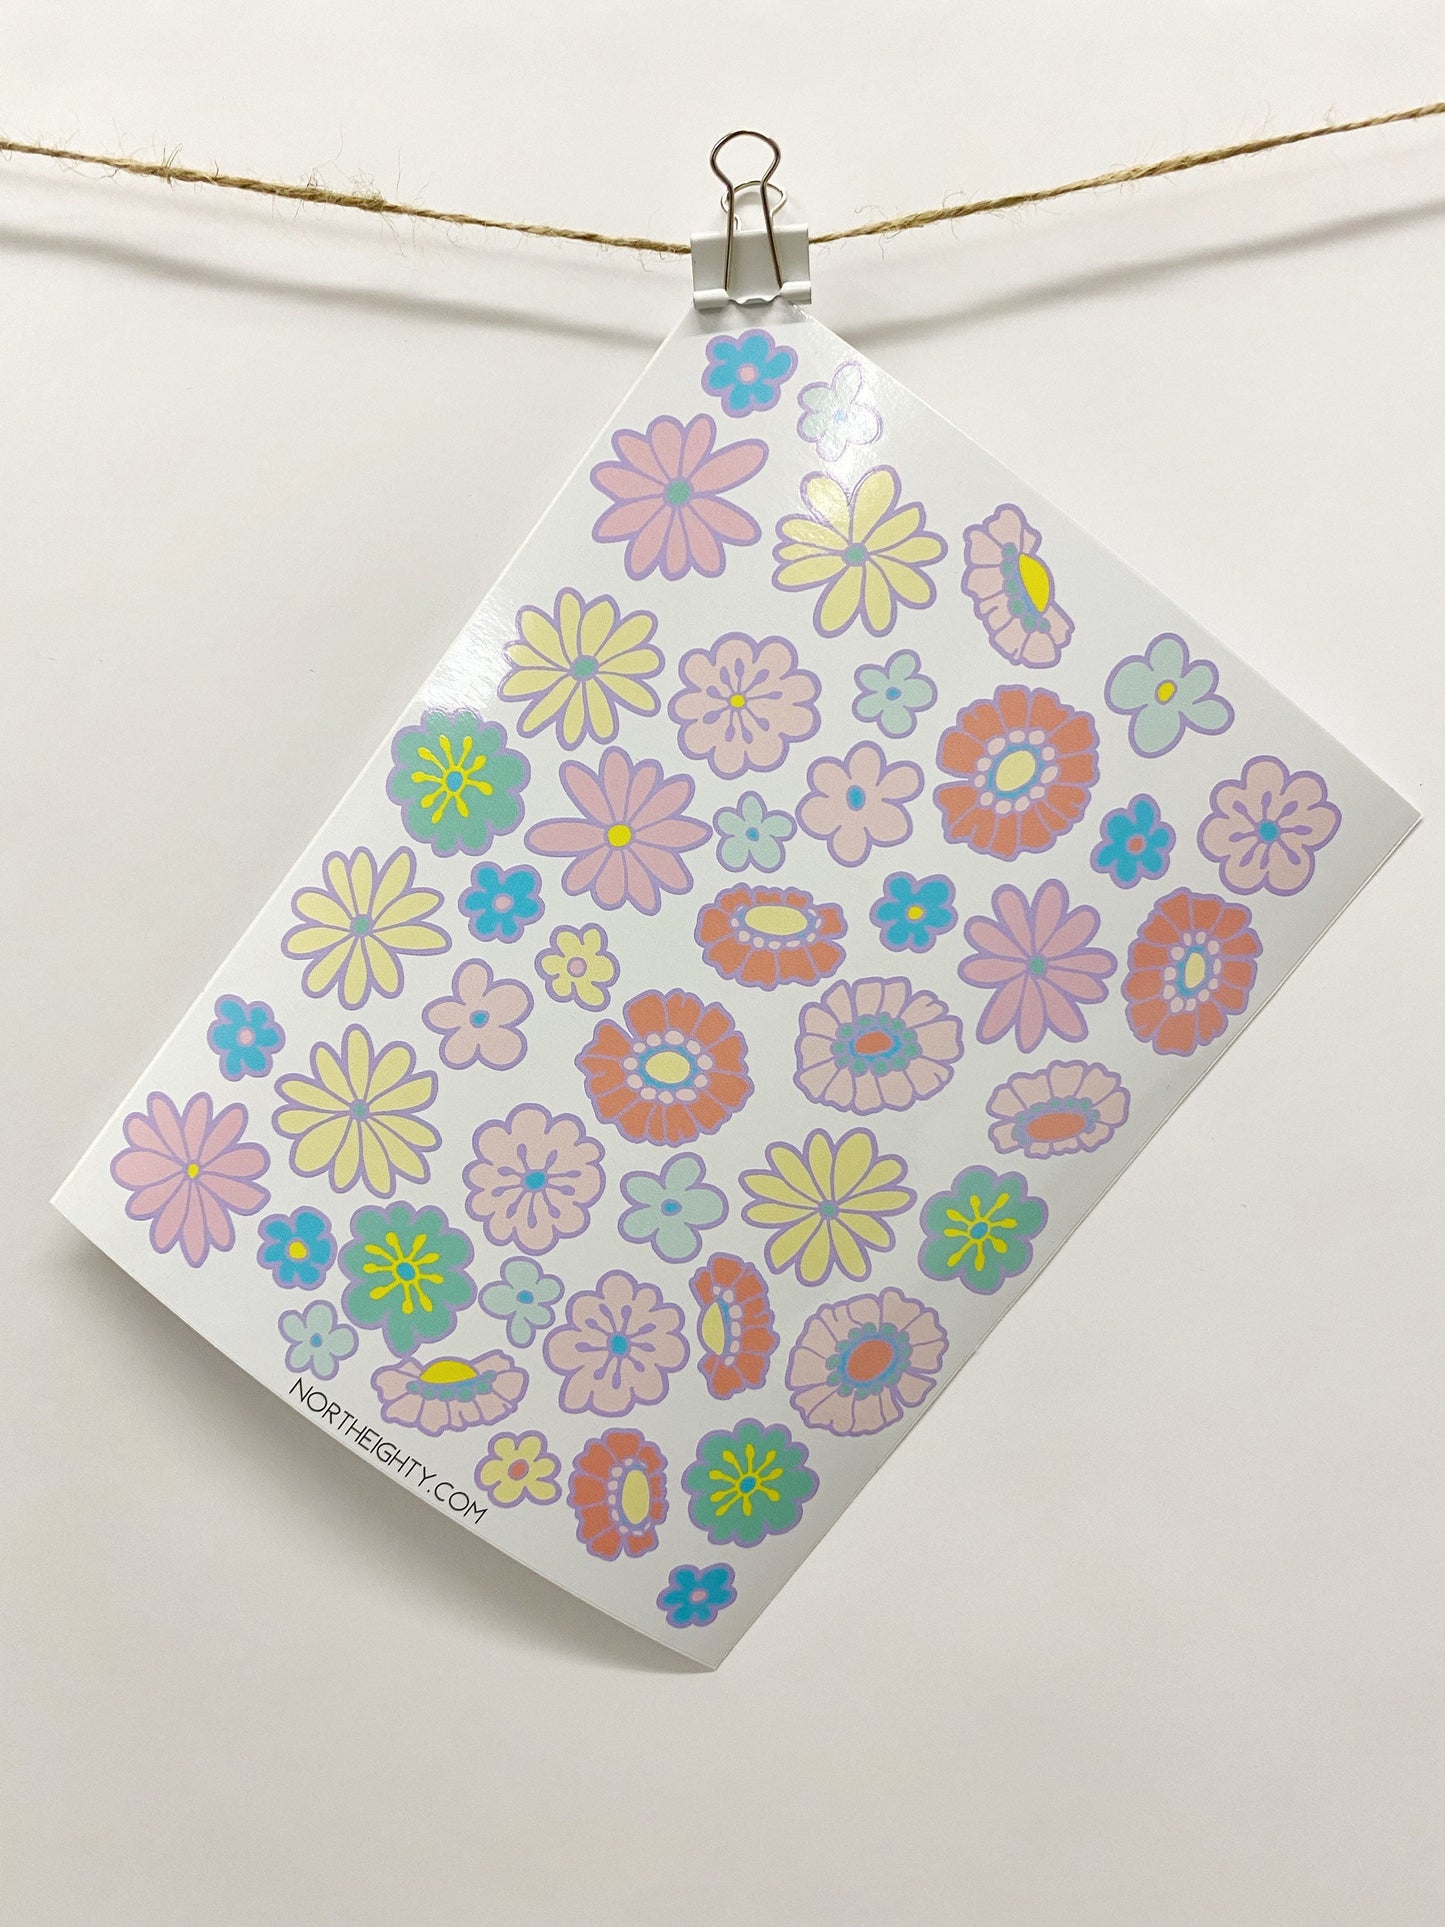 Sticker Sheet - Flower Decals - Daisy Stickers - Waterproof - Laptop - Tumbler Decals - Stand Mixer - Sticker Sheet - Flowers - Vinyl Decals